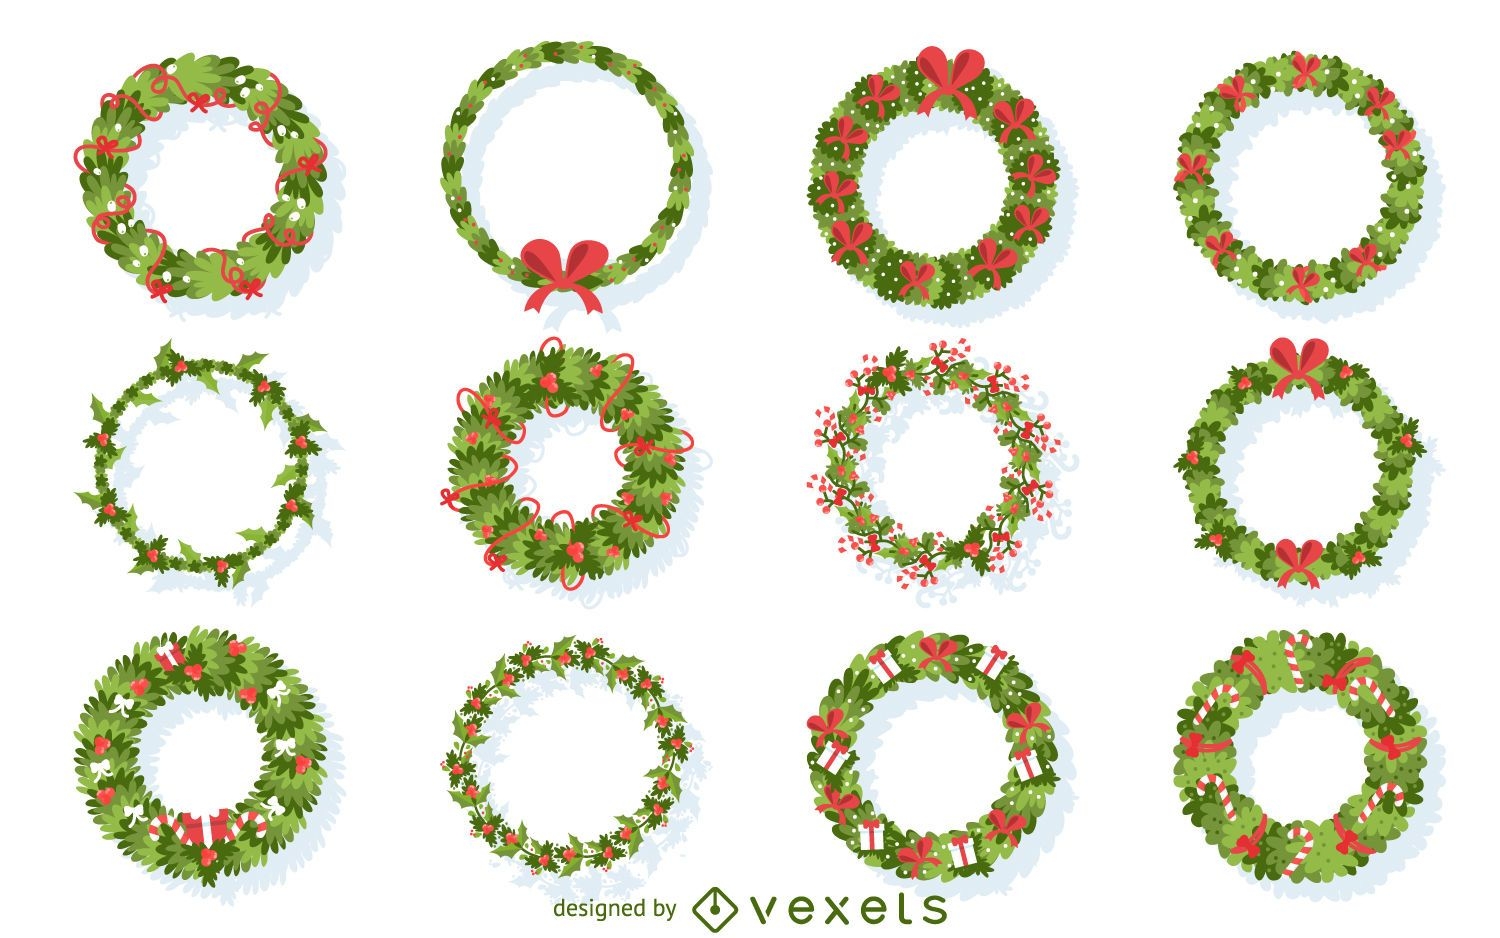 Flat Christmas wreath illustration collection